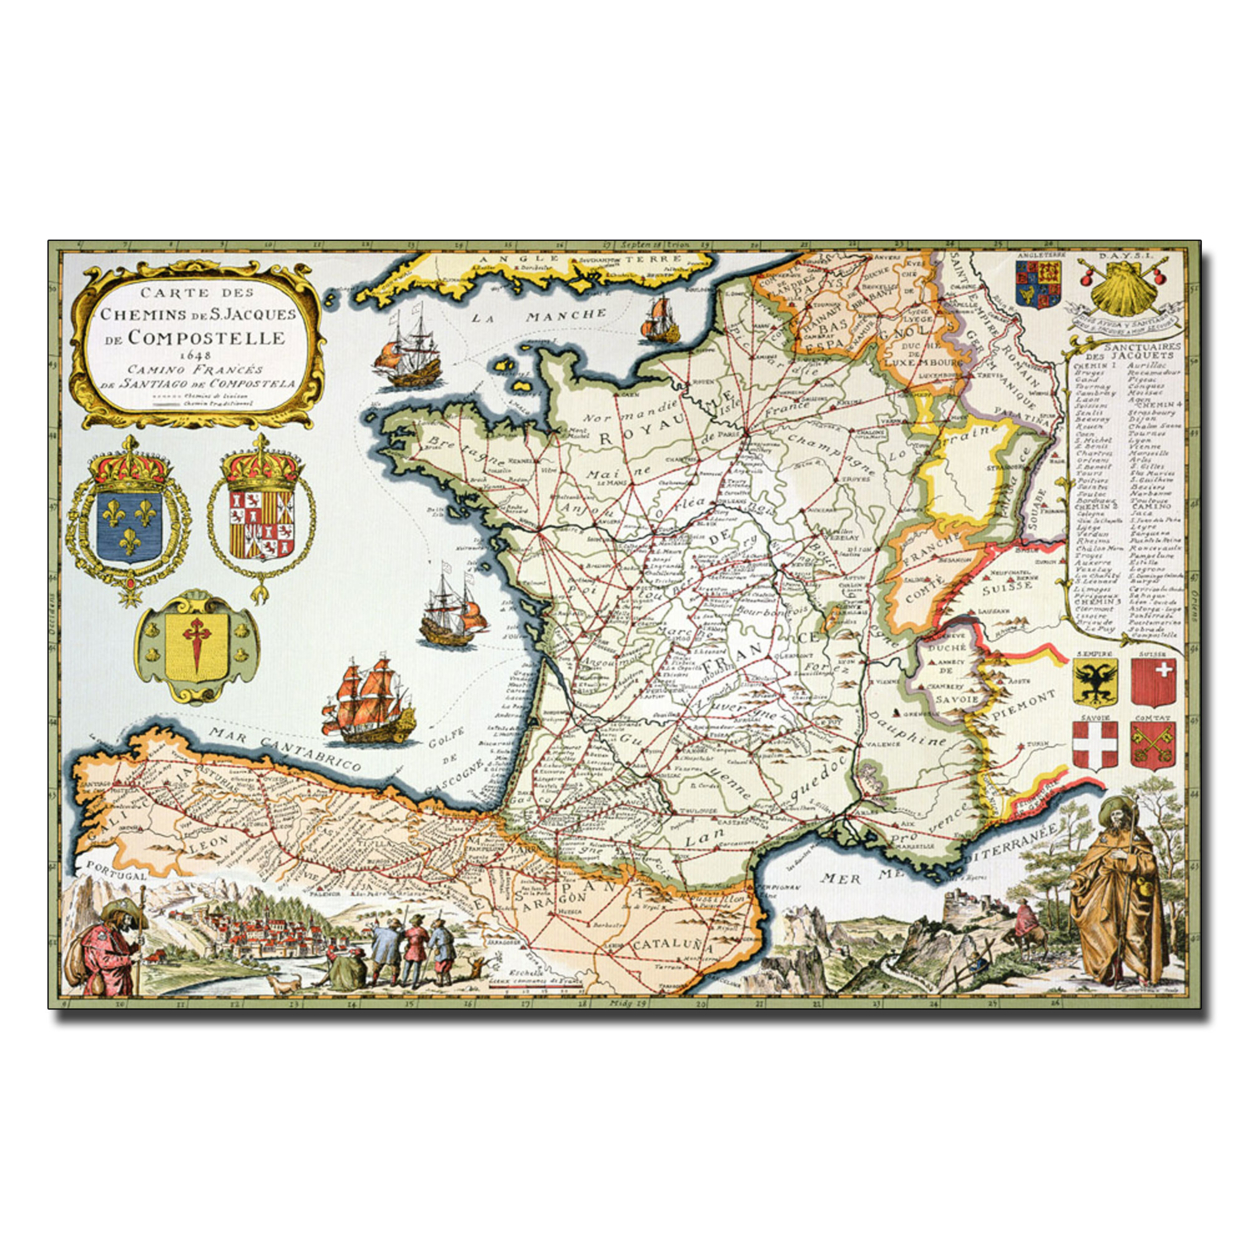 D Serveaux 'Map Of Routes Of St James 1648' Canvas Wall Art 35 X 47